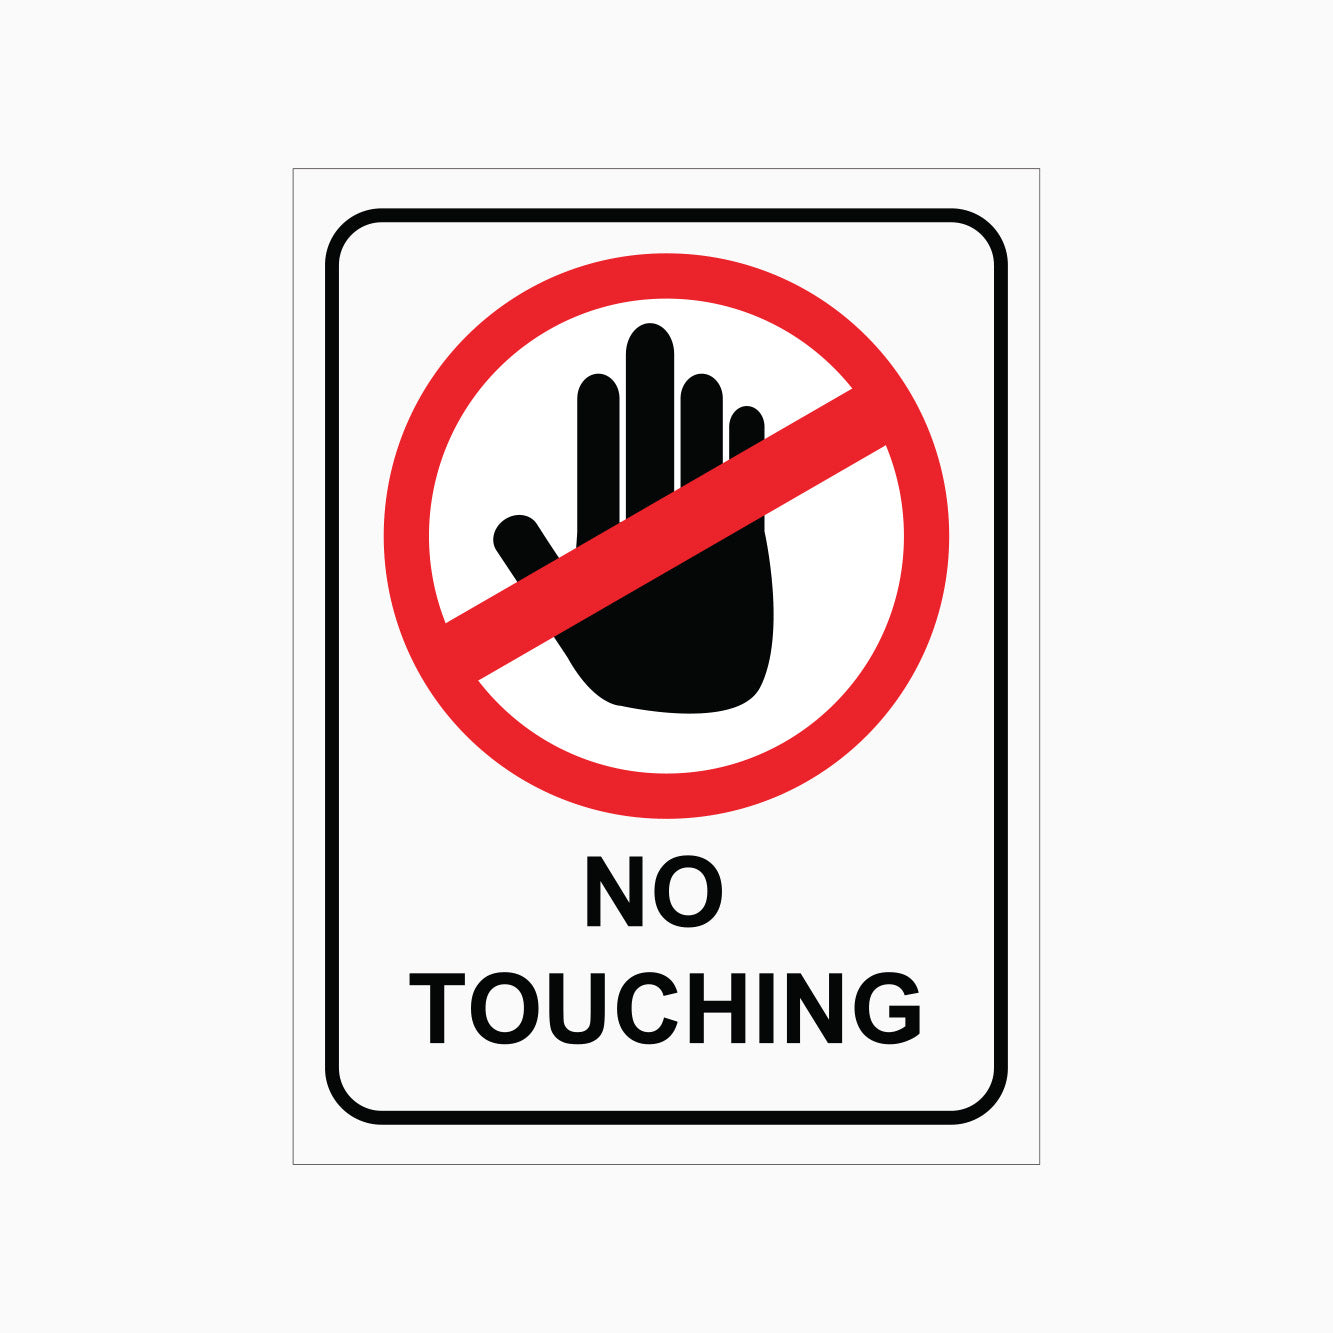 NO TOUCHING SIGN